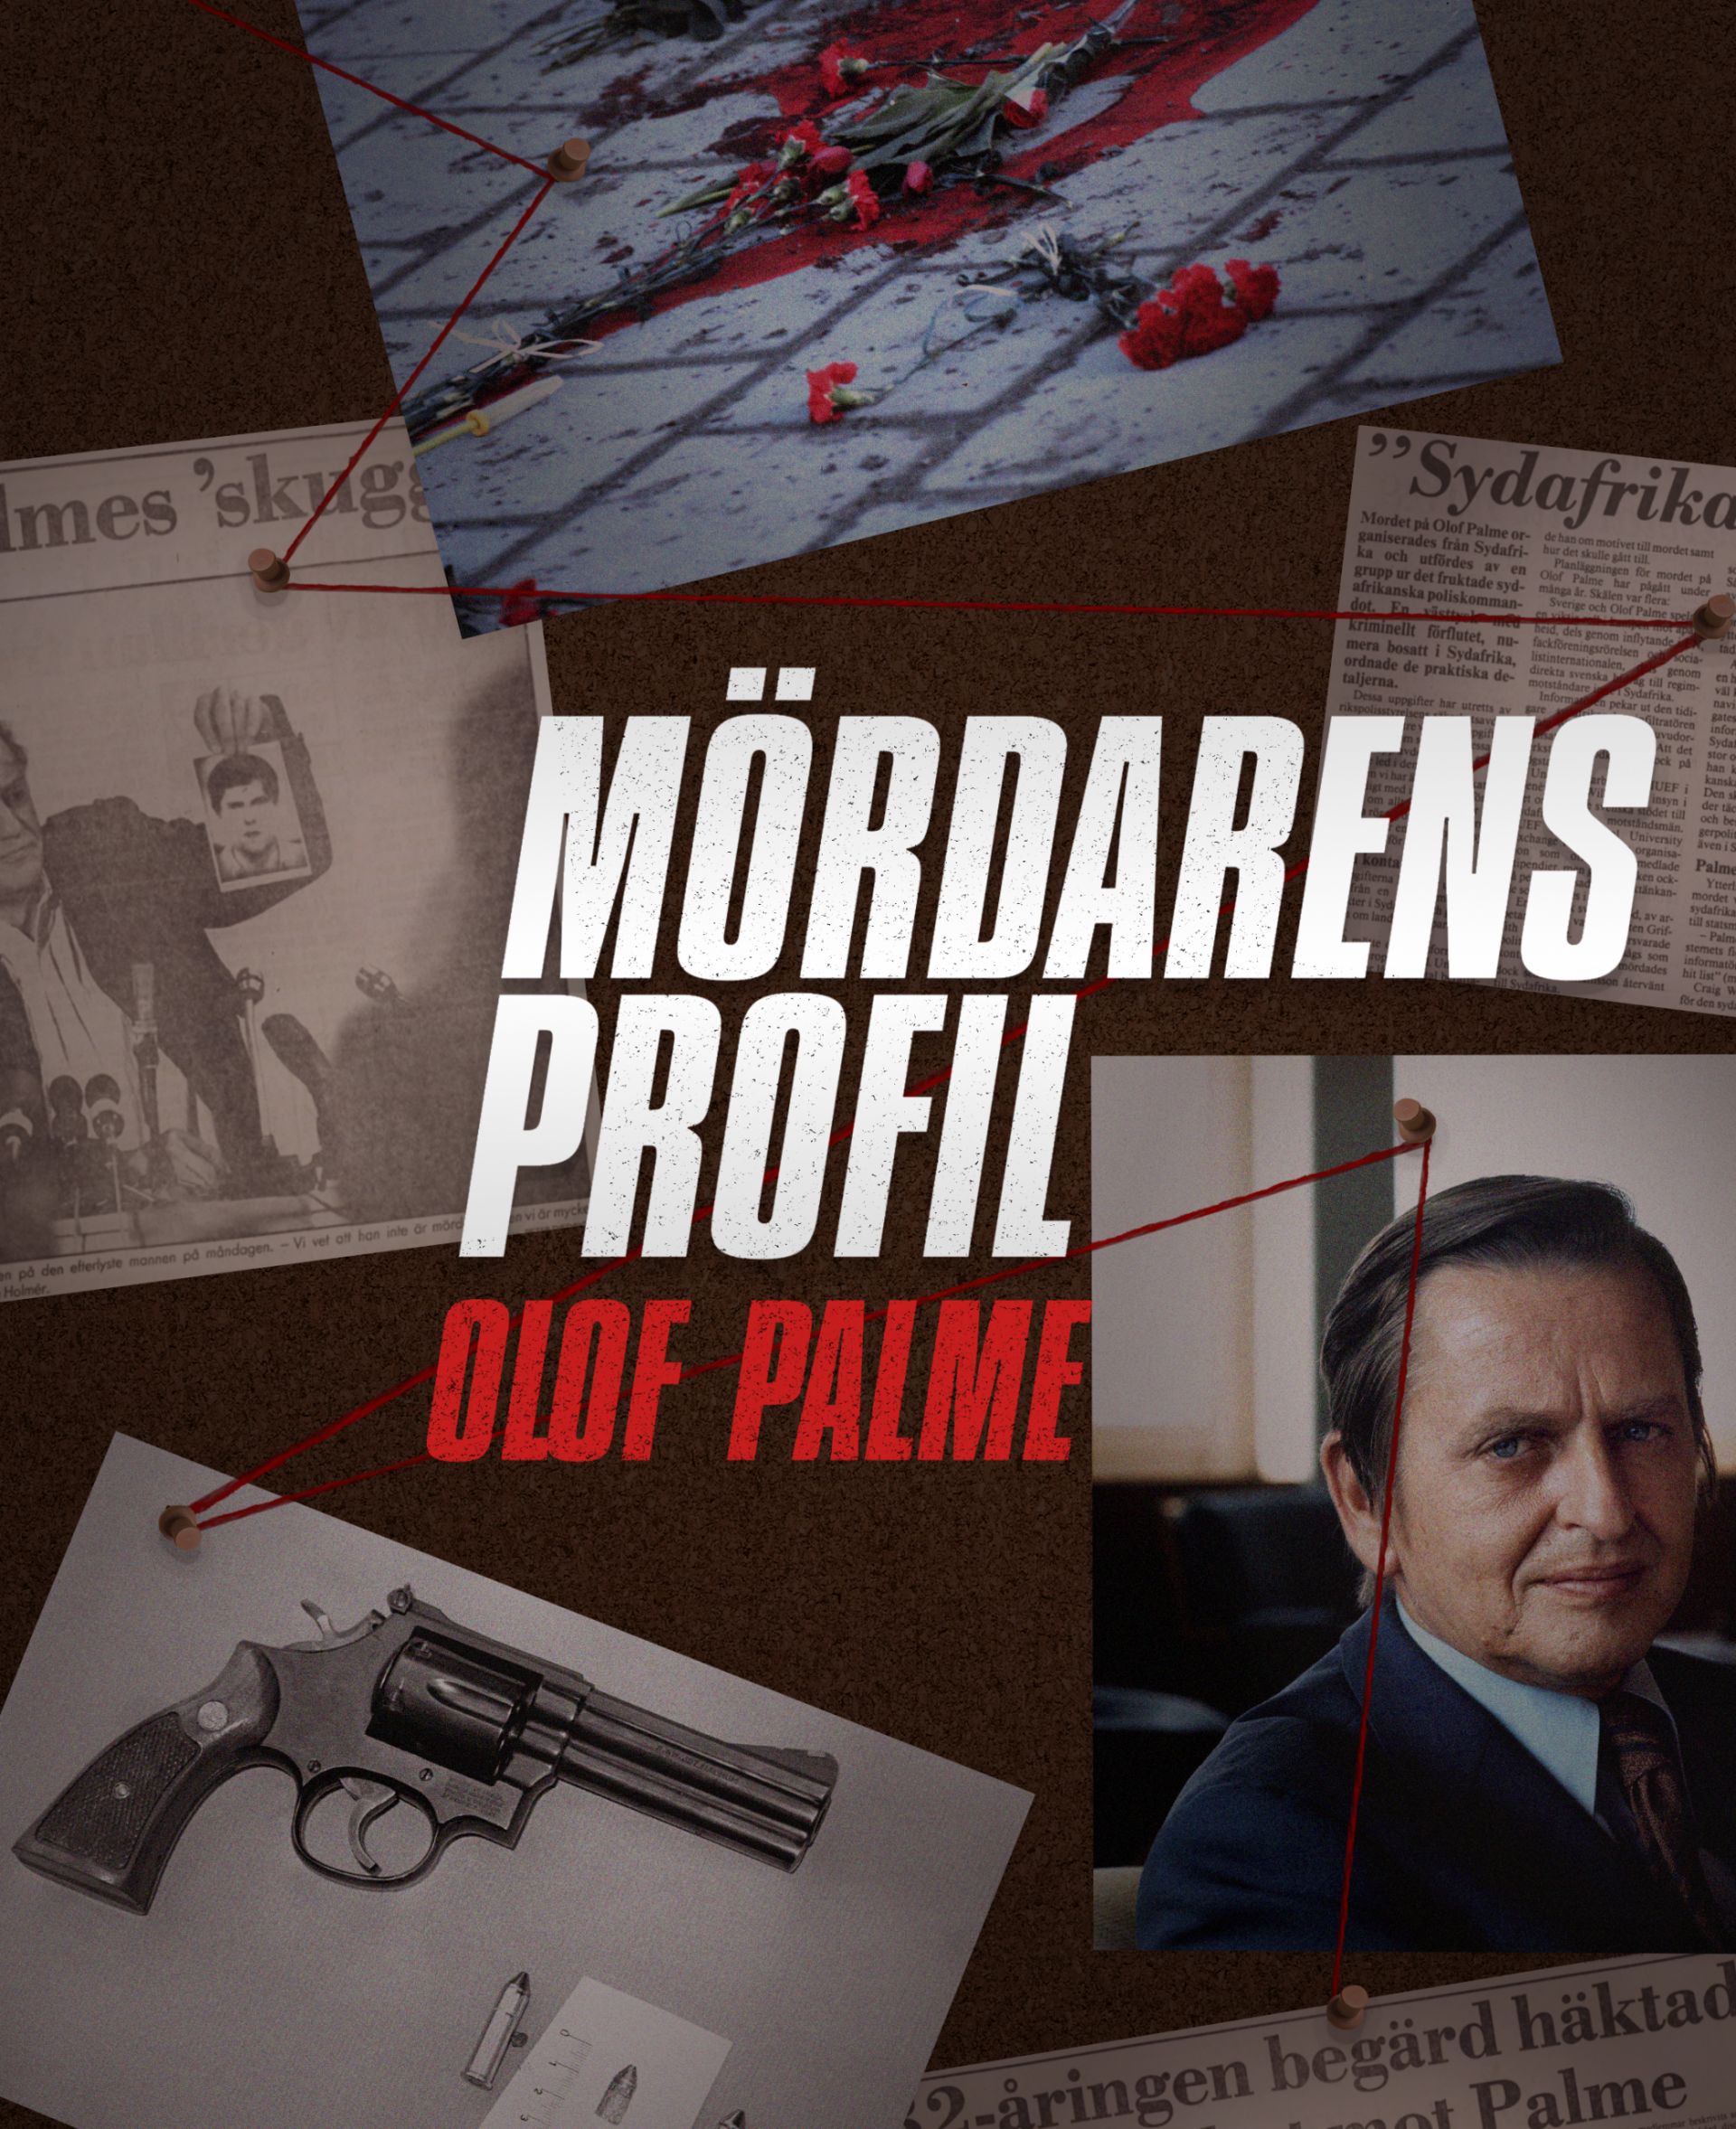 Mördarens profil: Olof Palme